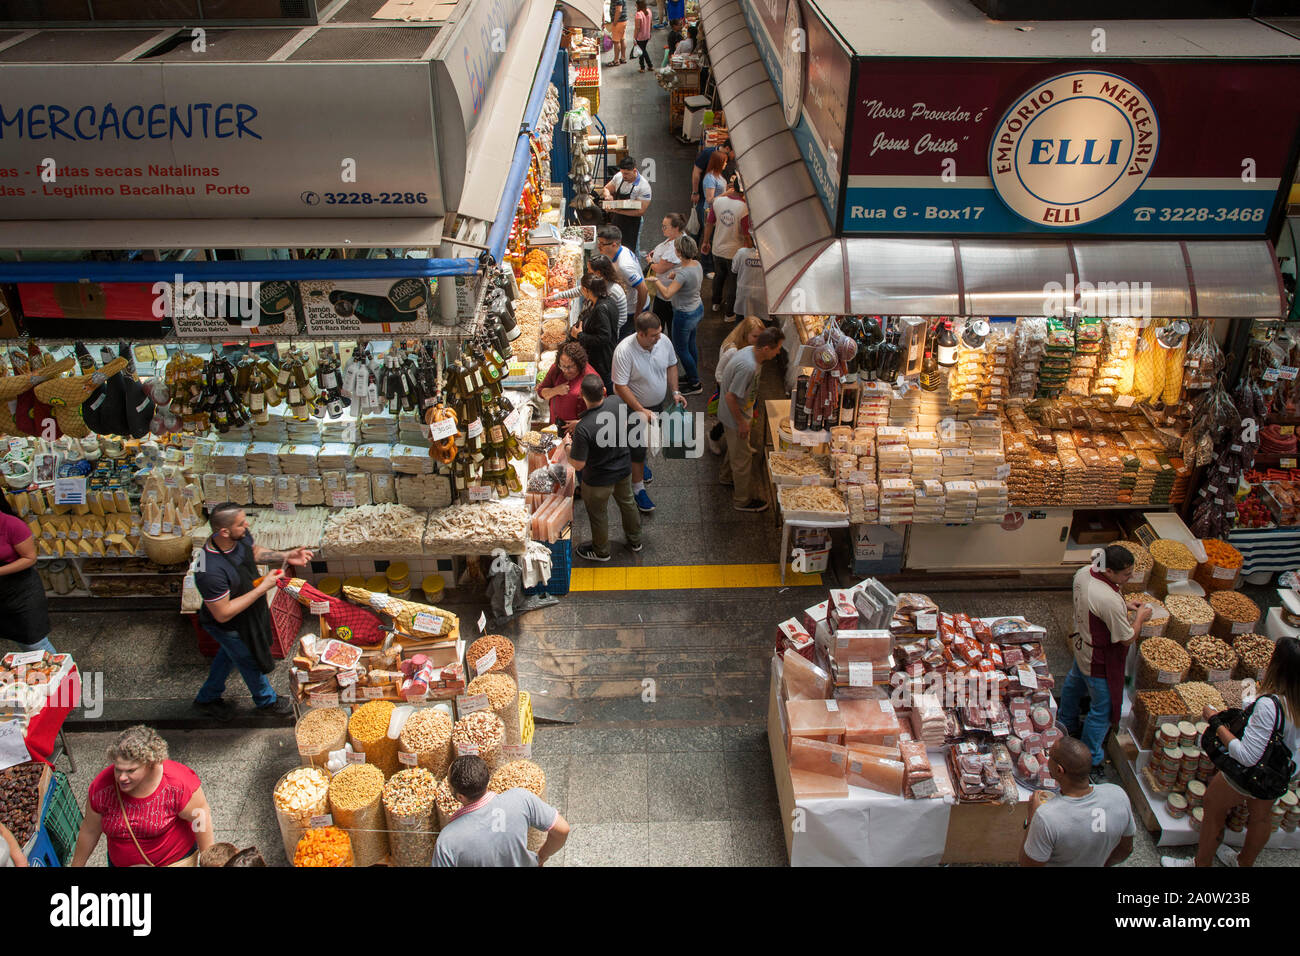 Interior of the São Paulo municipal market in São Paulo, Brazil. Stock Photo